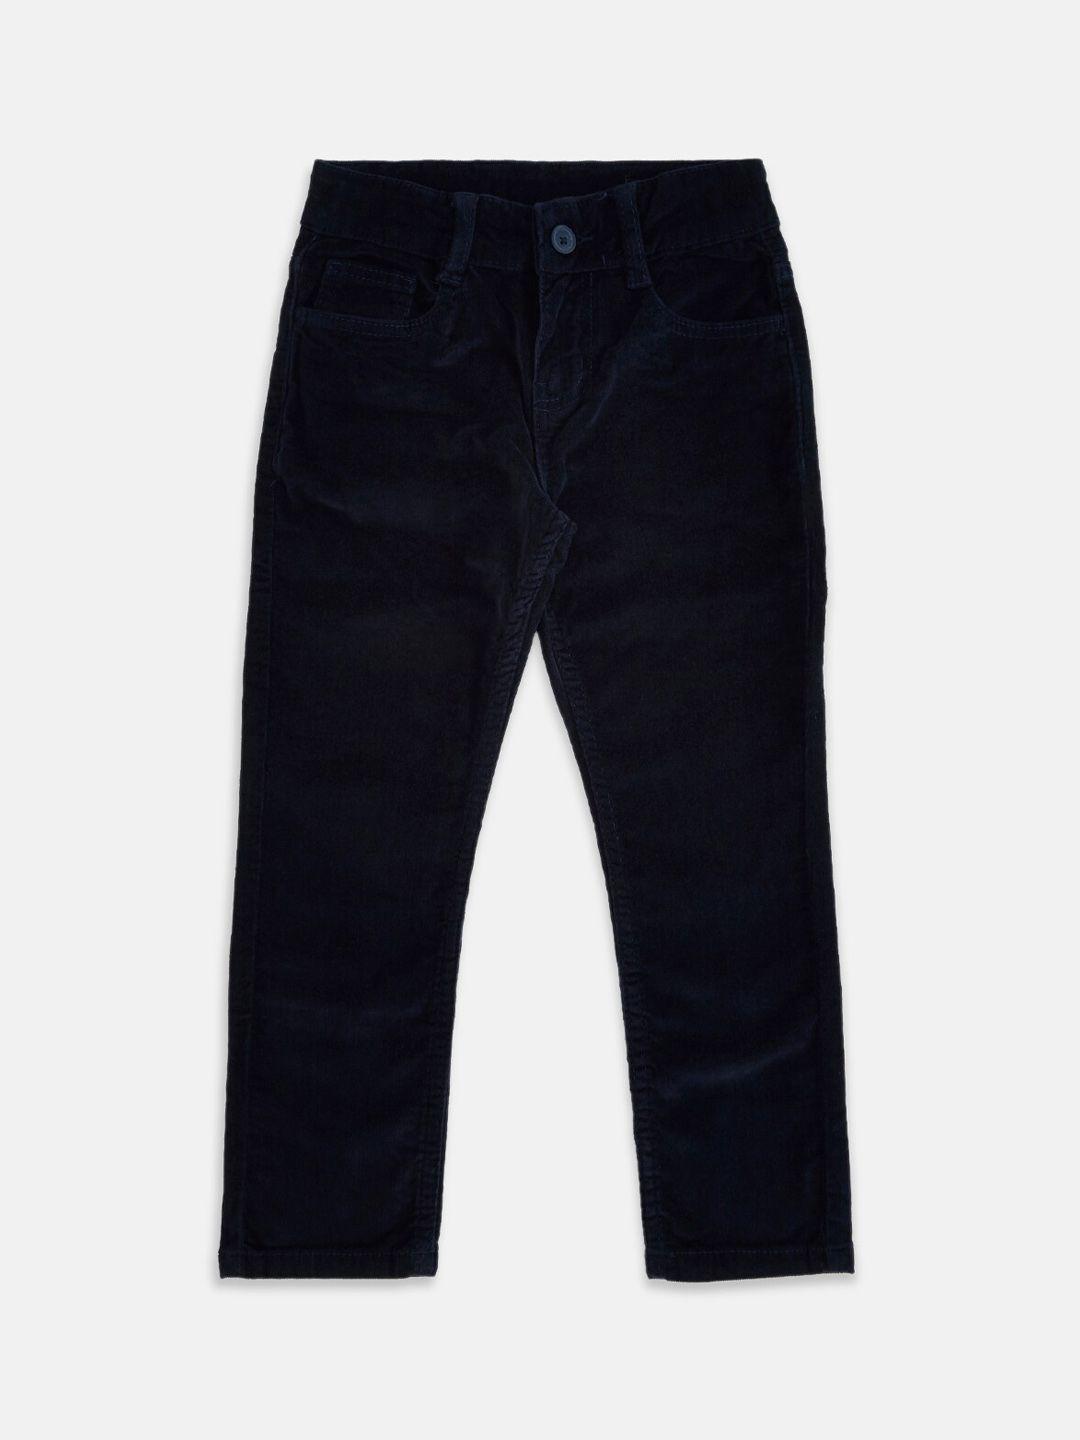 pantaloons junior boys navy blue corduroy trousers